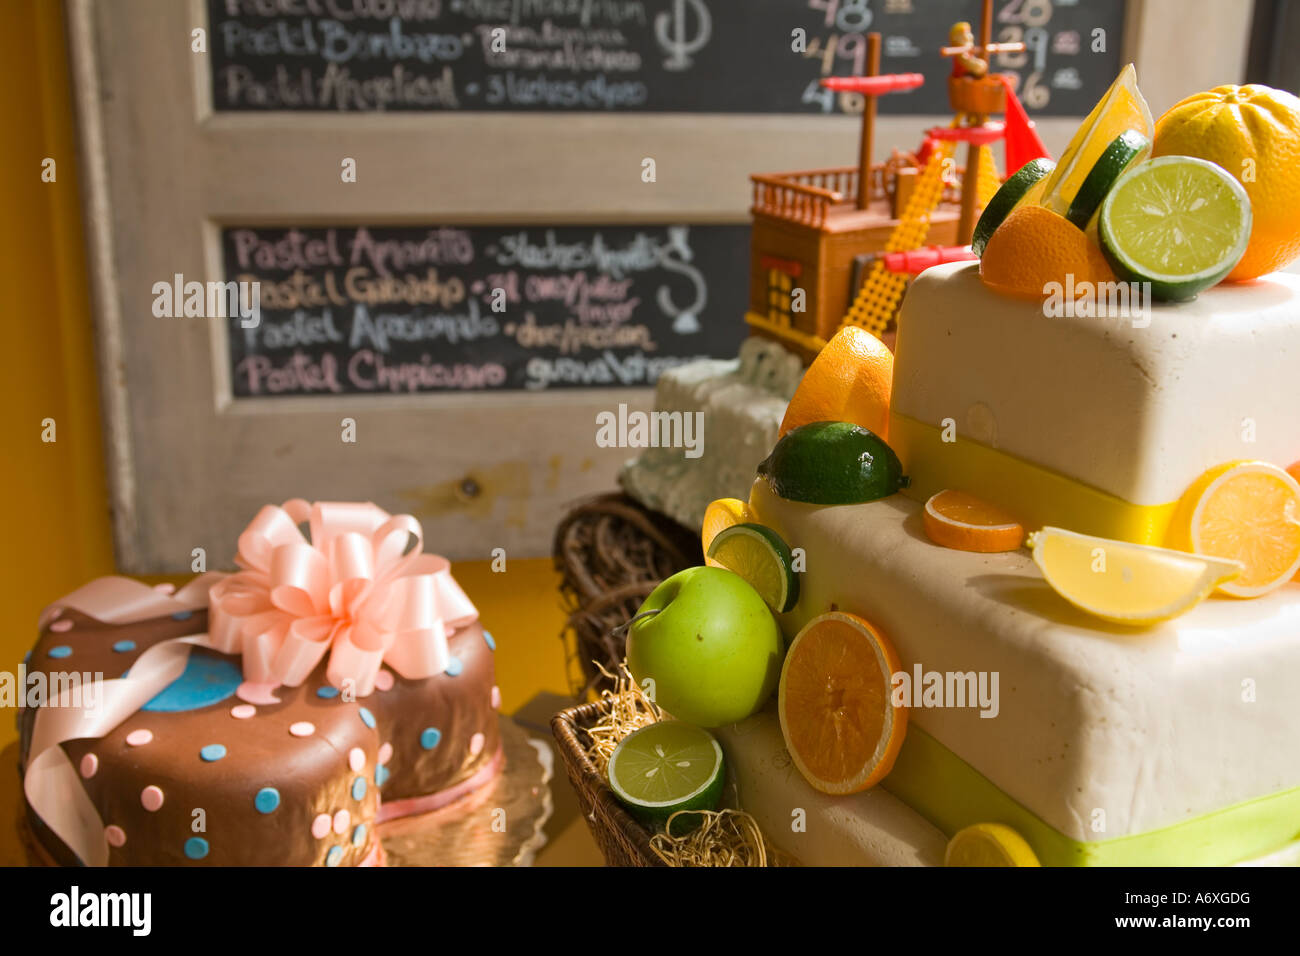 ILLINOIS Chicago Decorated cakes in bakery store window in Pilsen neighborhood prices on chalkboard Stock Photo